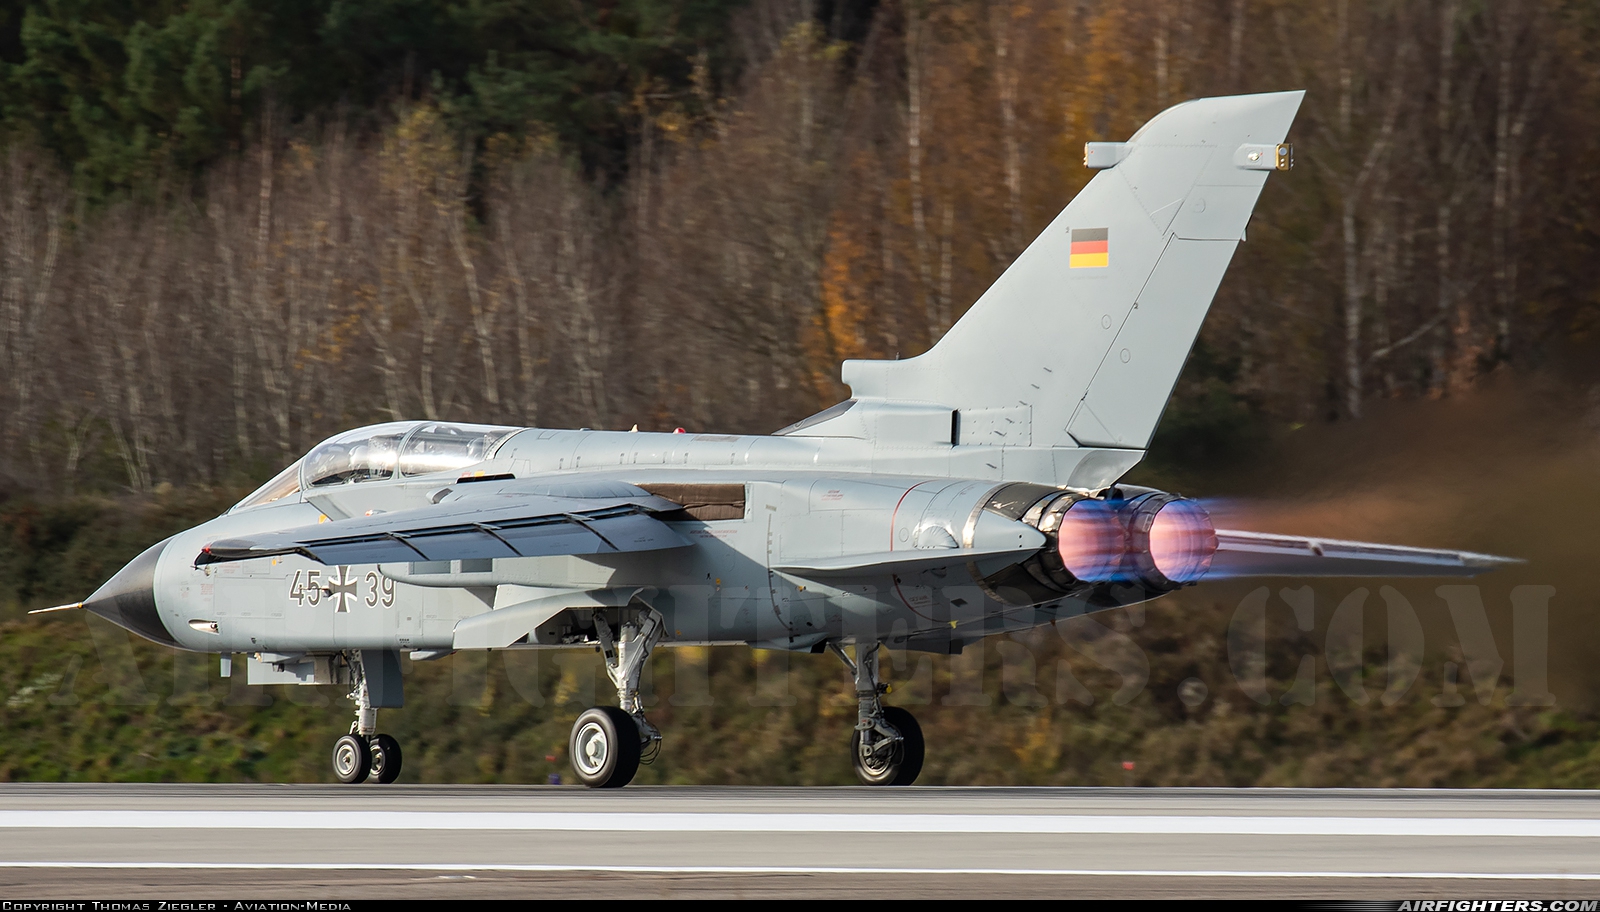 Germany - Air Force Panavia Tornado IDS 45+39 at Ingolstadt - Manching (ETSI), Germany